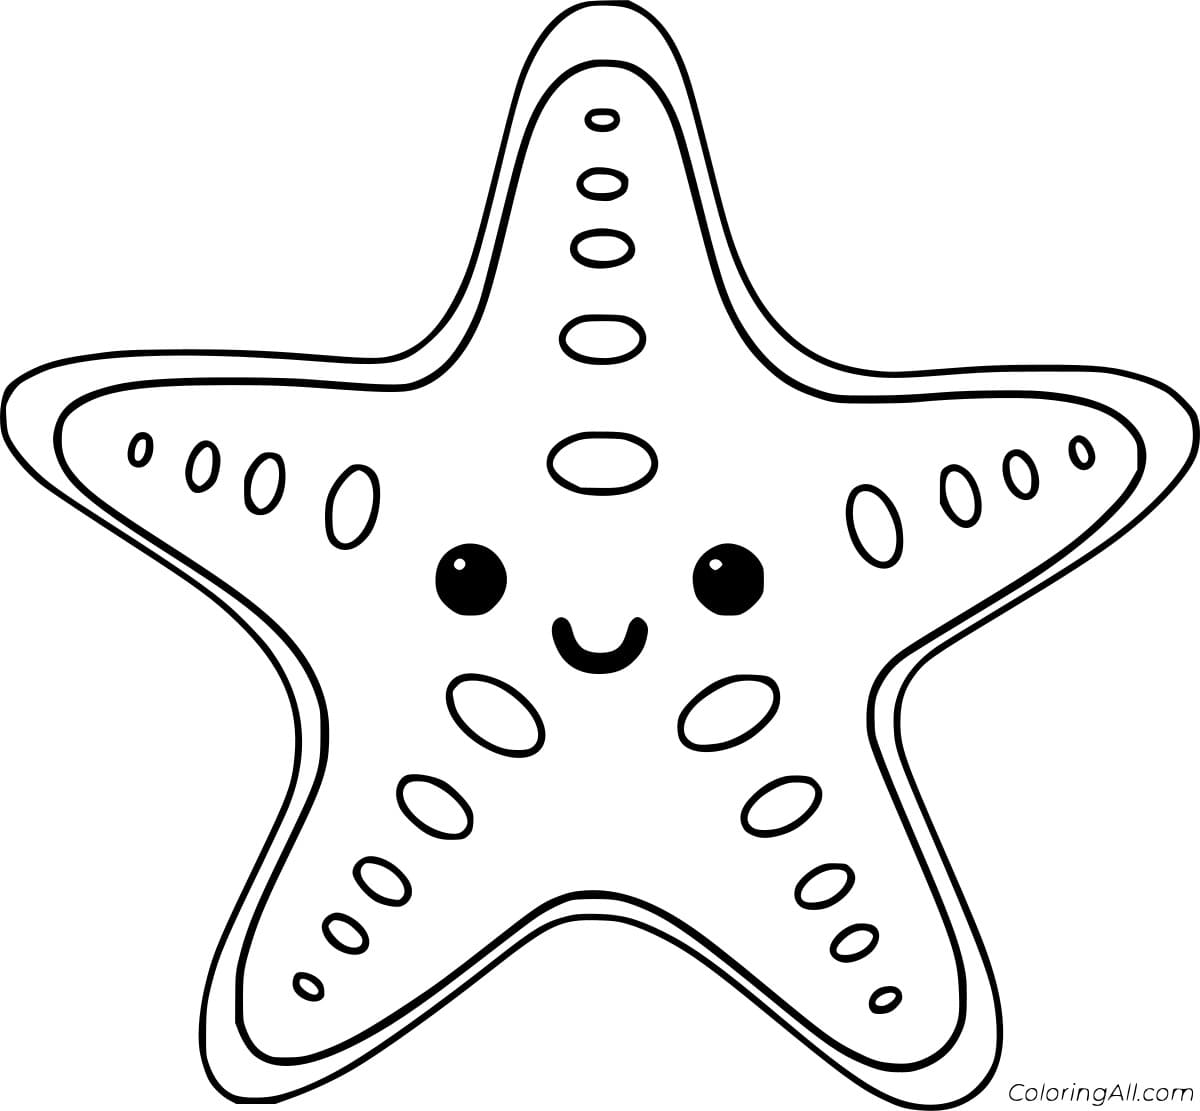 Simple Cute Starfish Image